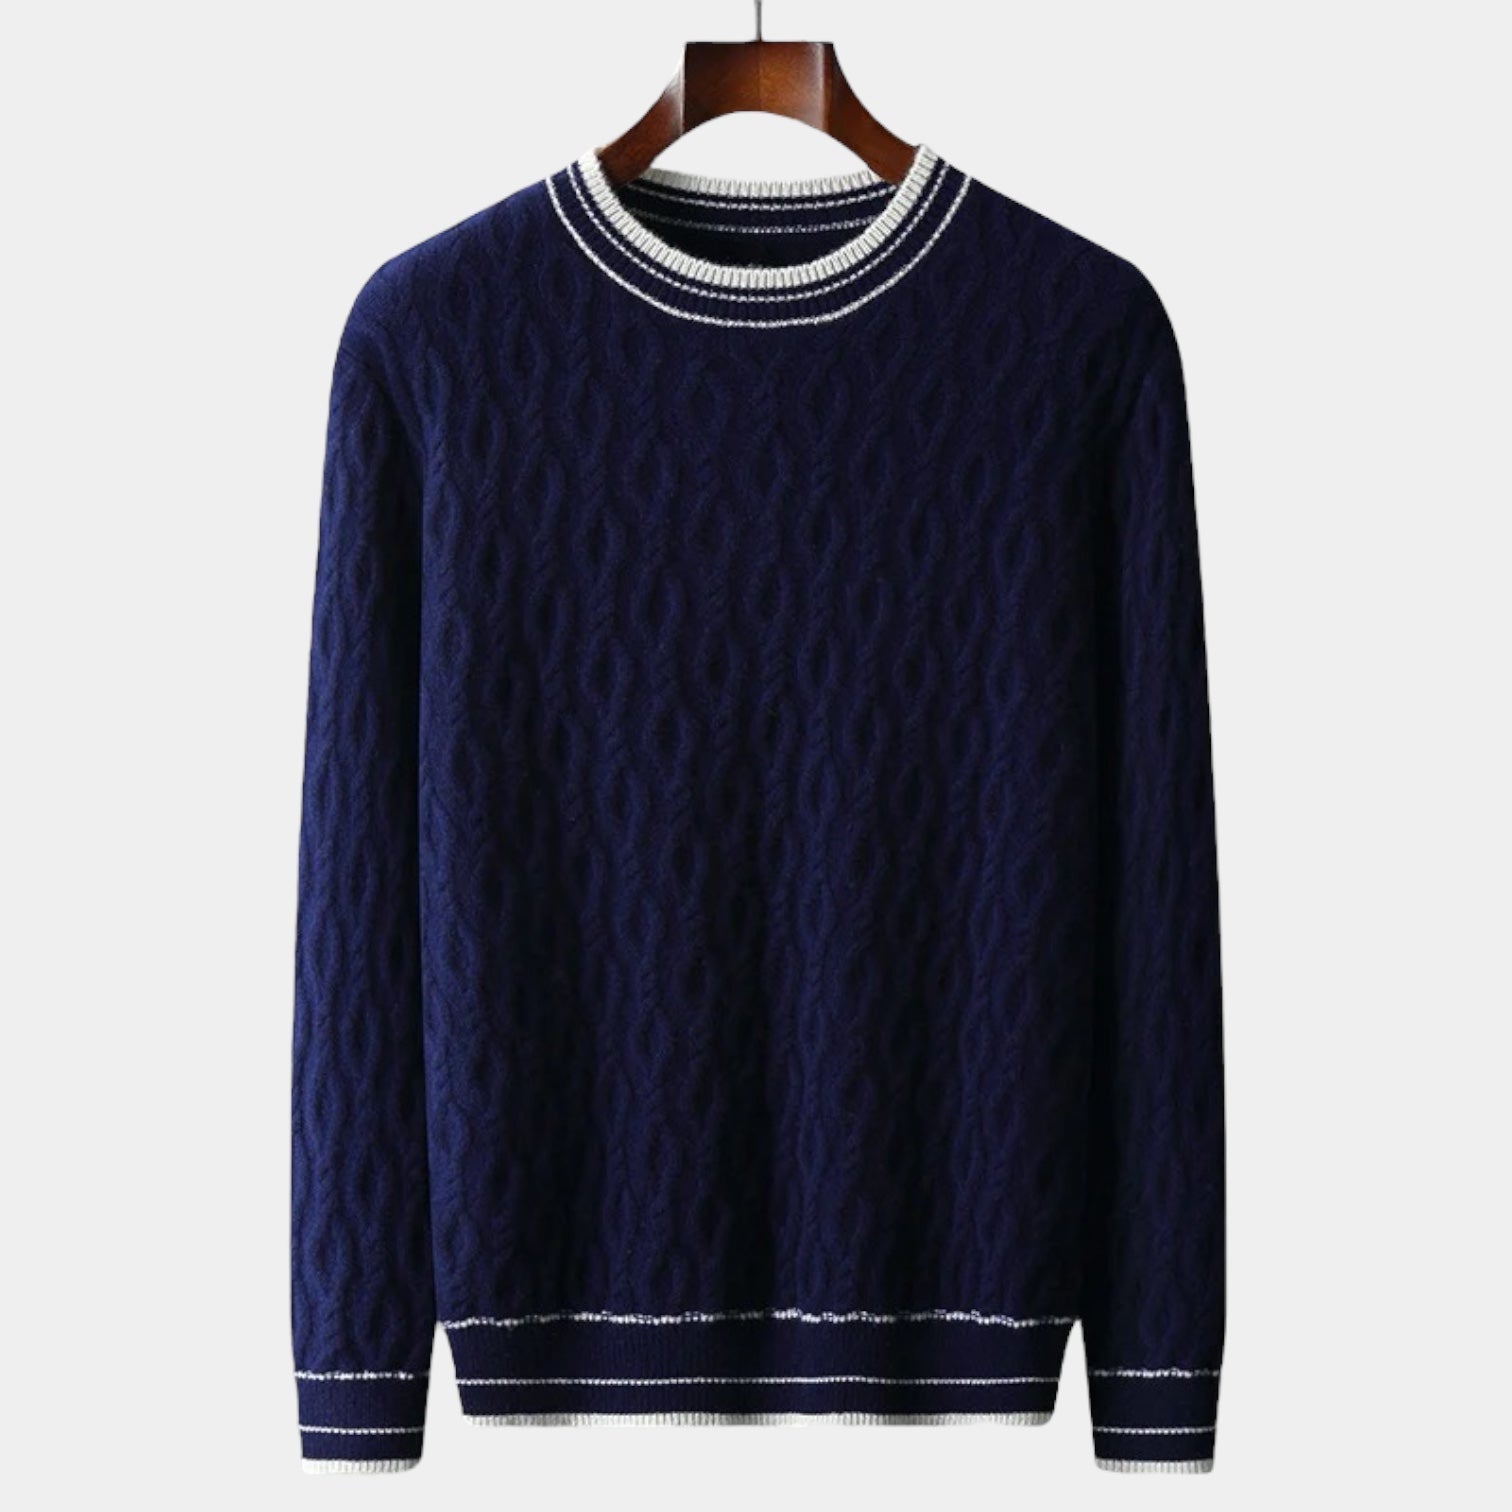 OLD MONEY Merino Wool Round Neck Knitted Sweater